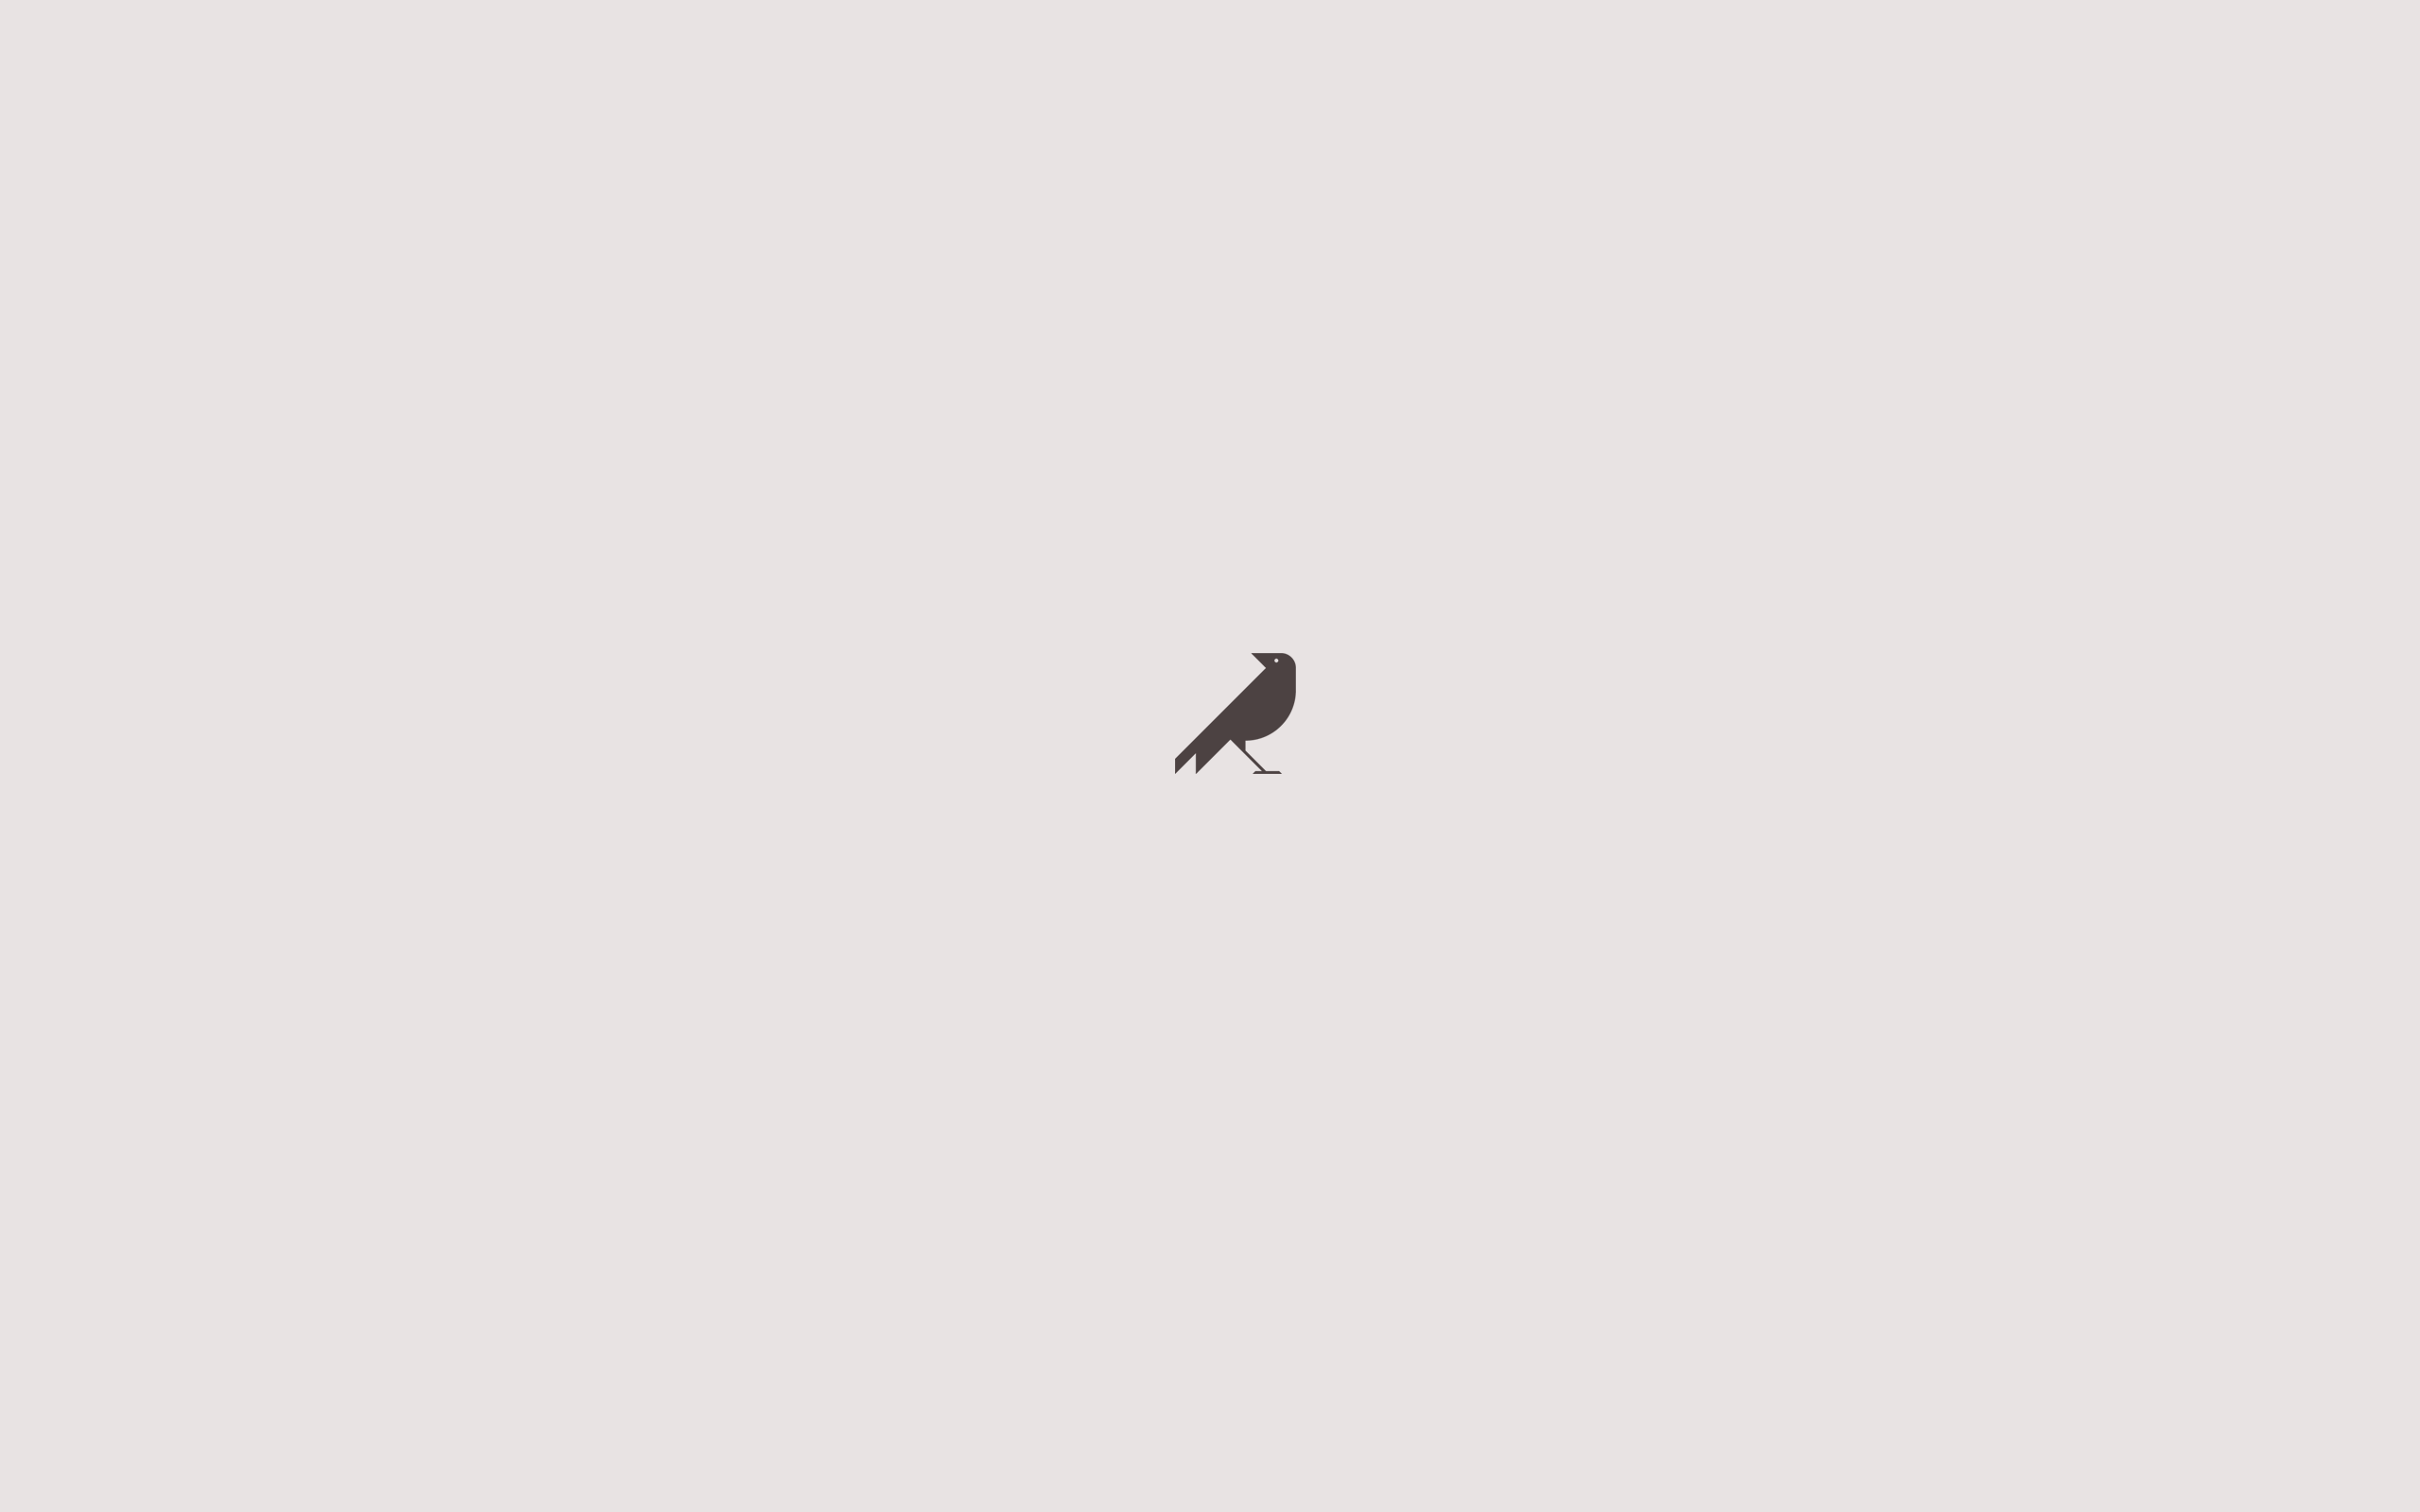 General 2560x1600 minimalism simple background gray crow silhouette digital art animals